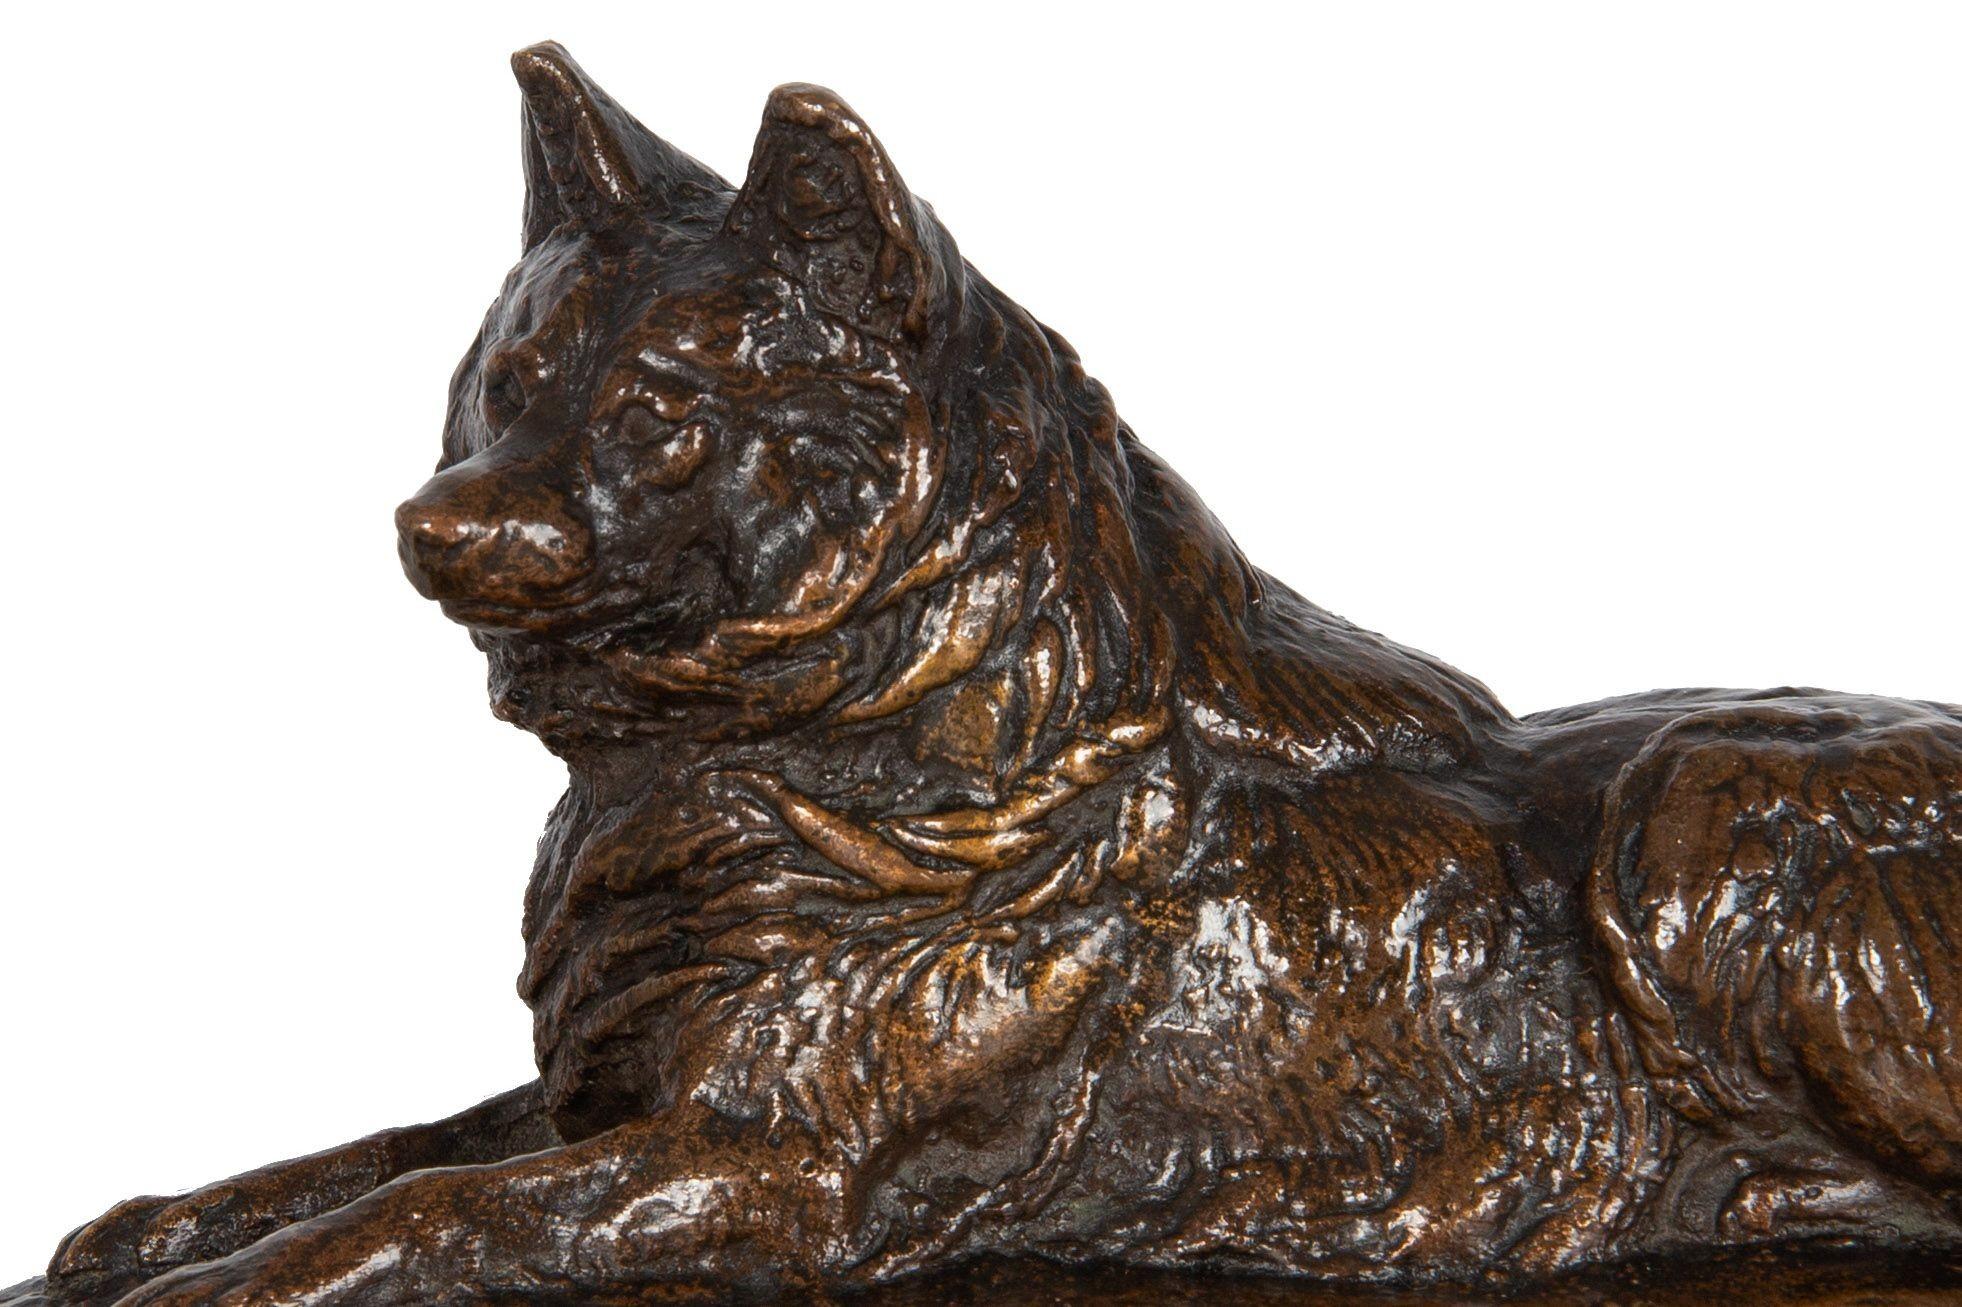 19th Century Rare Emmanuel Fremiet “Husky Dog” Bronze Sculpture, Charles More cast no. 38 For Sale